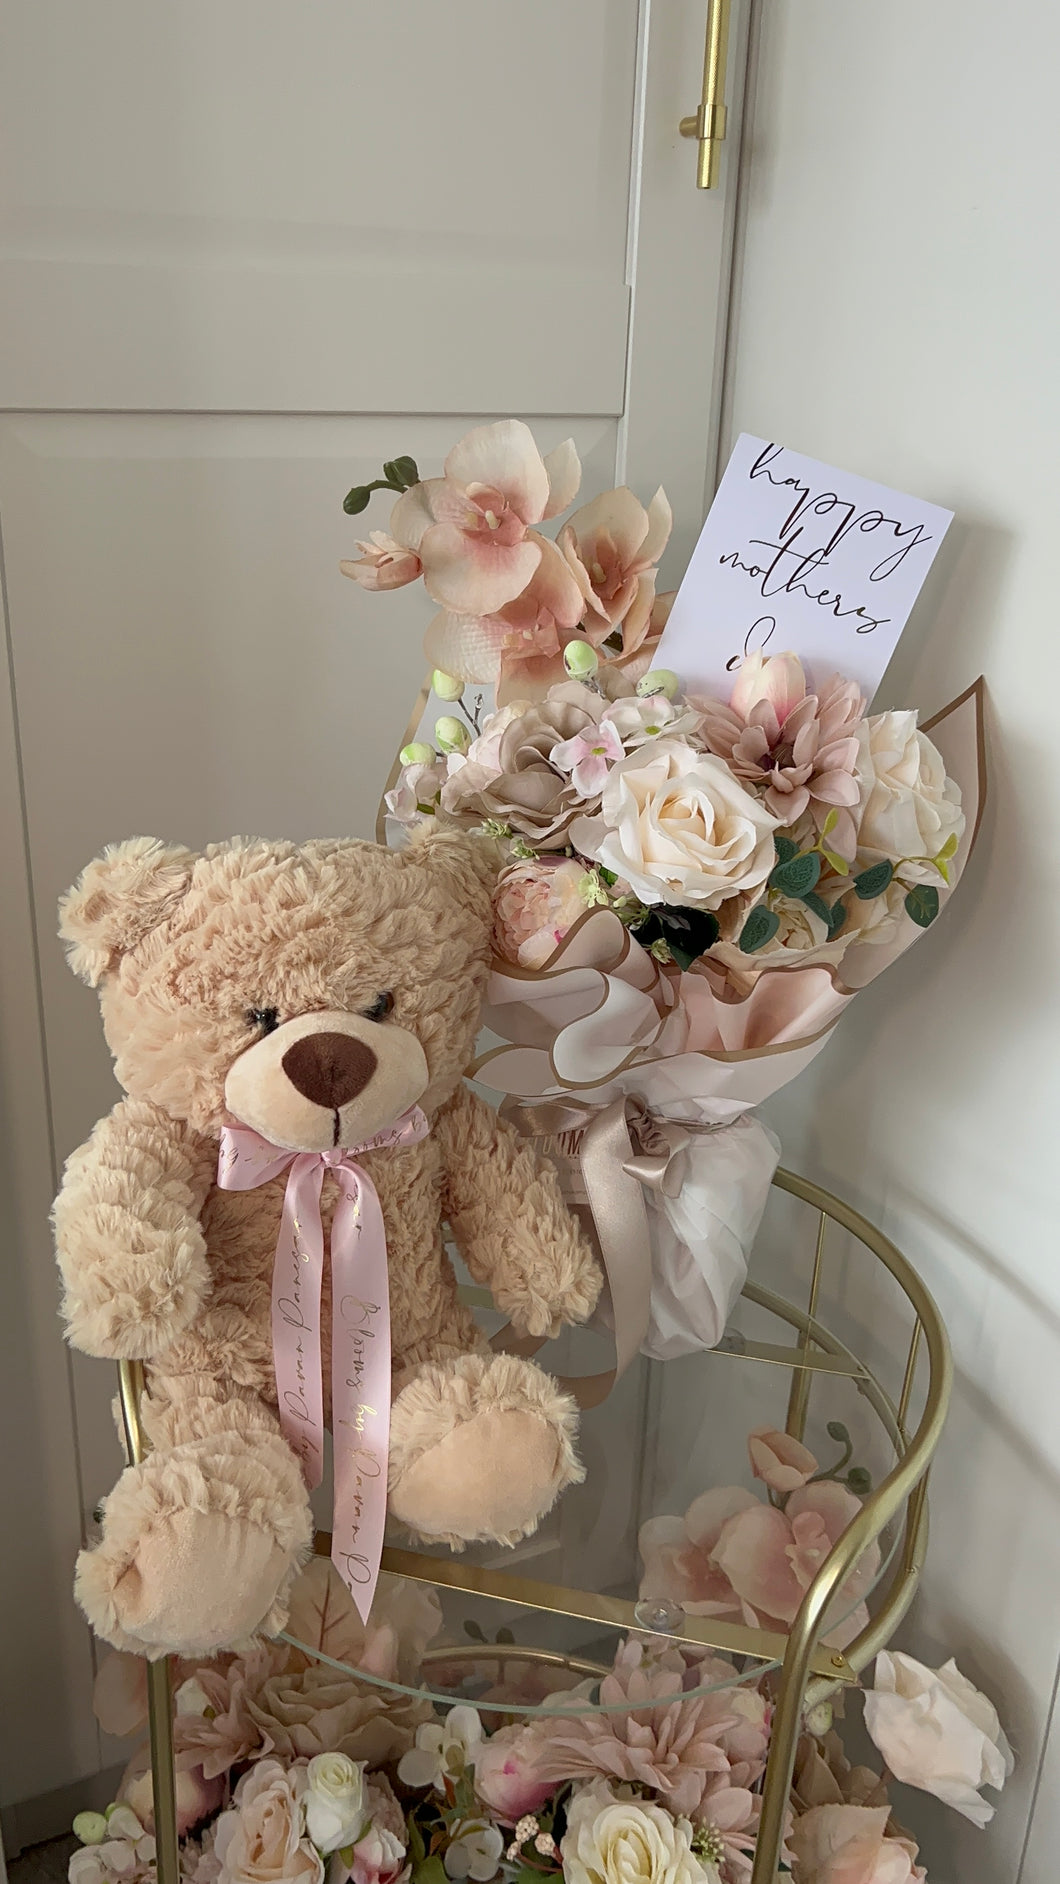 BUNDLE- Mixed flower bouquet & Teddy